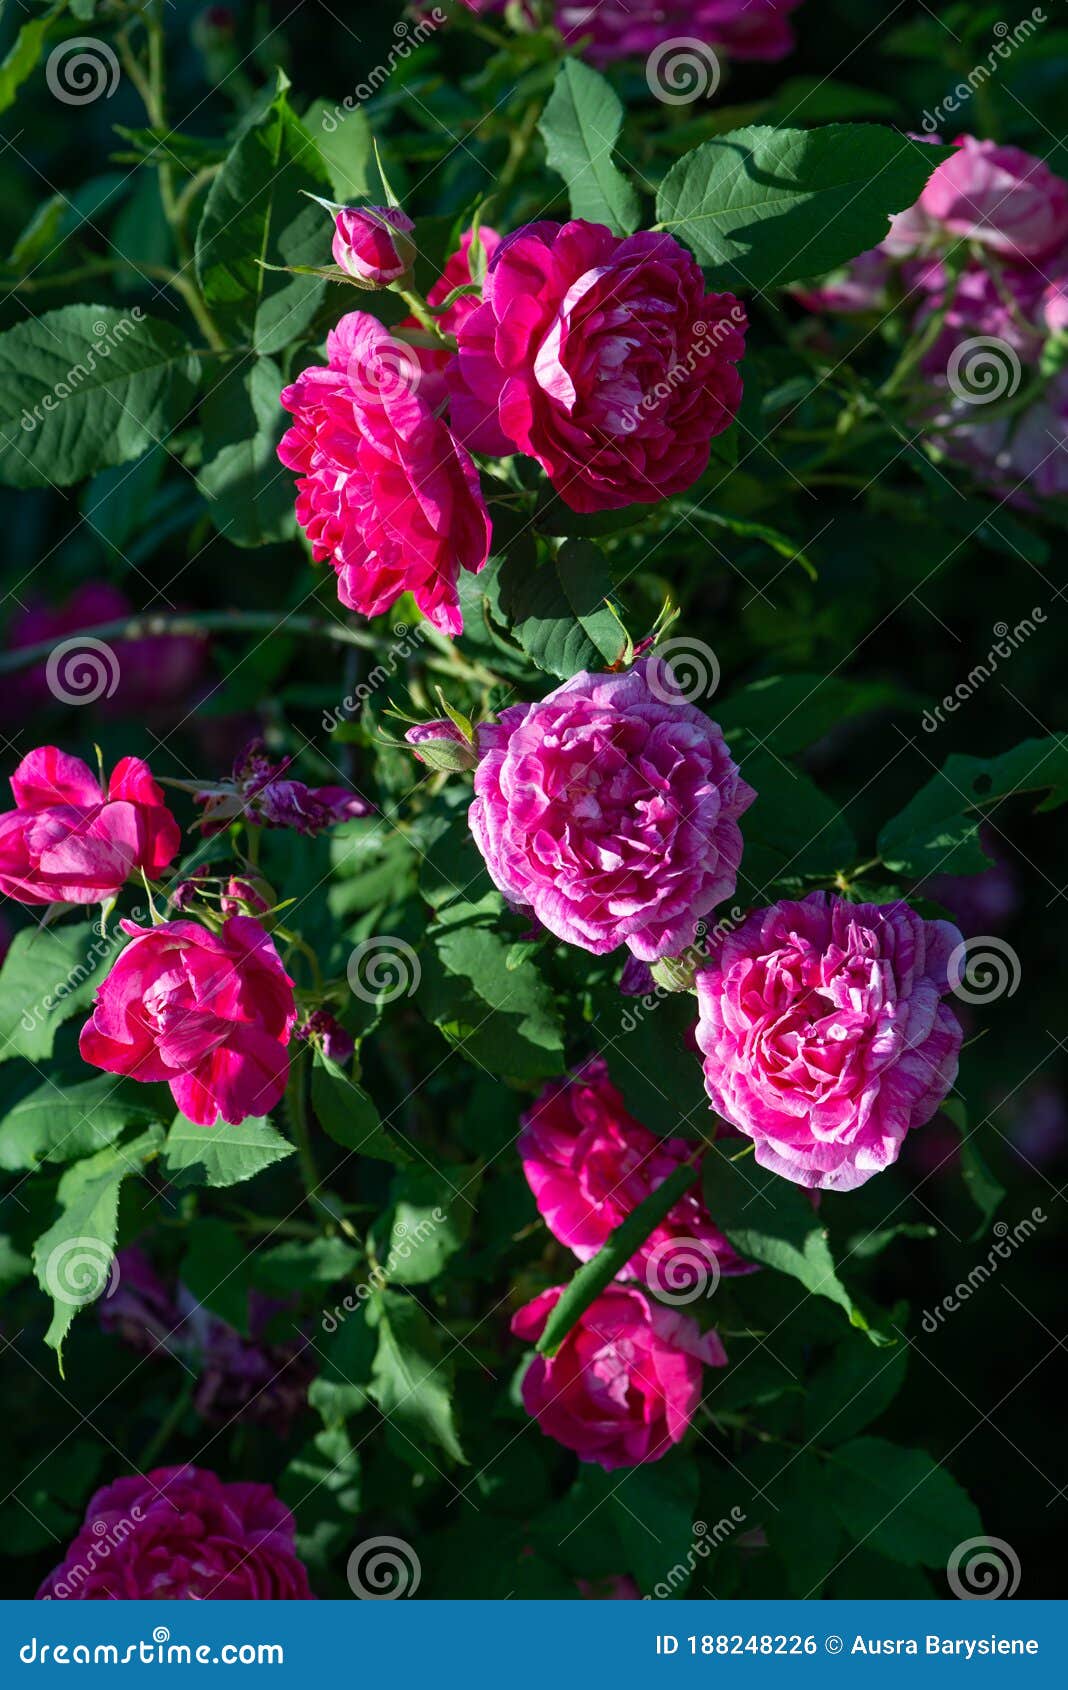 rose variety commandant beaurpaire flowering in a garden